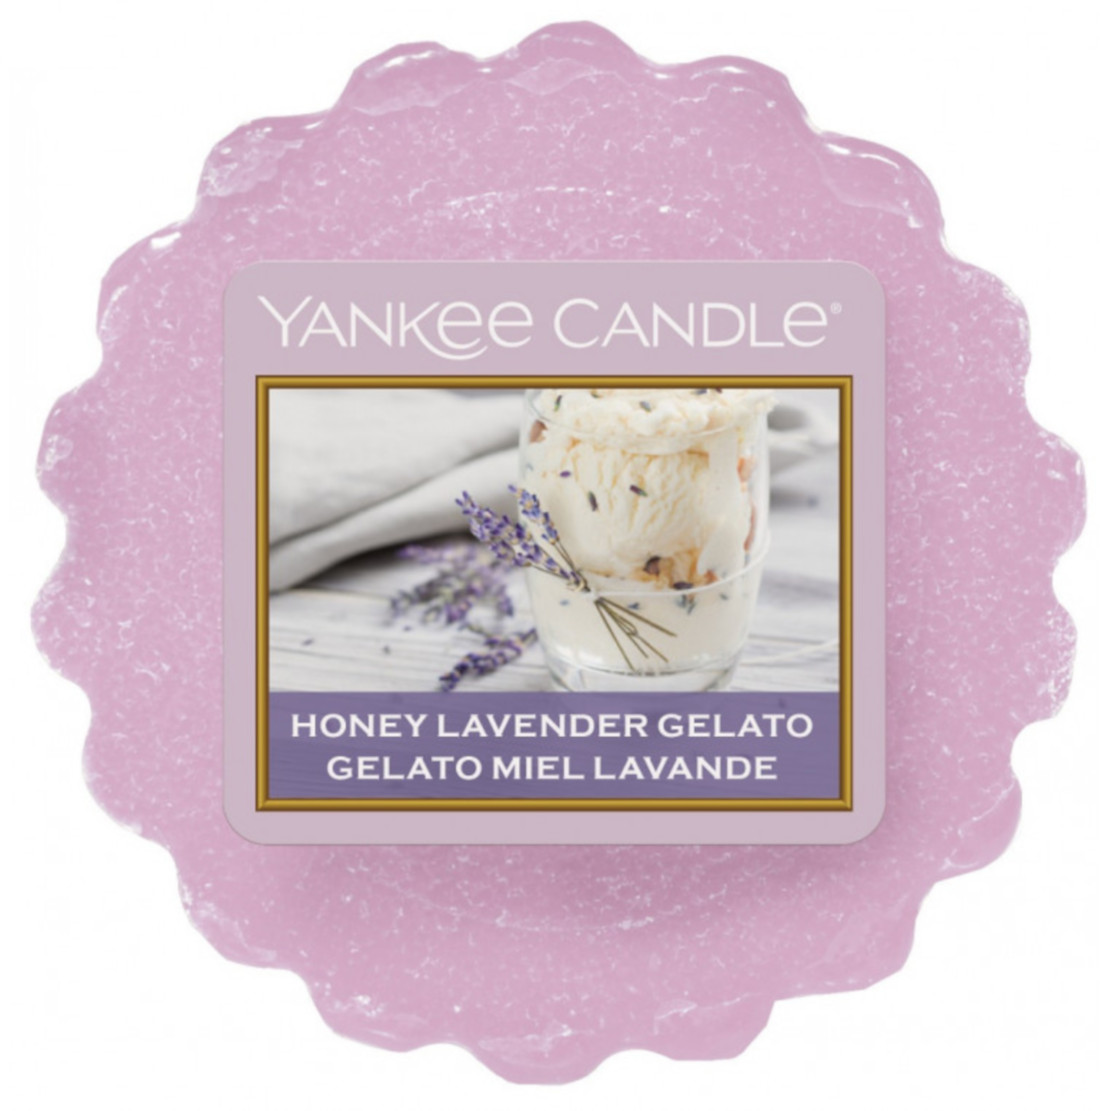 Yankee Candle Honey Lavender Gelato Wax Melt Tart